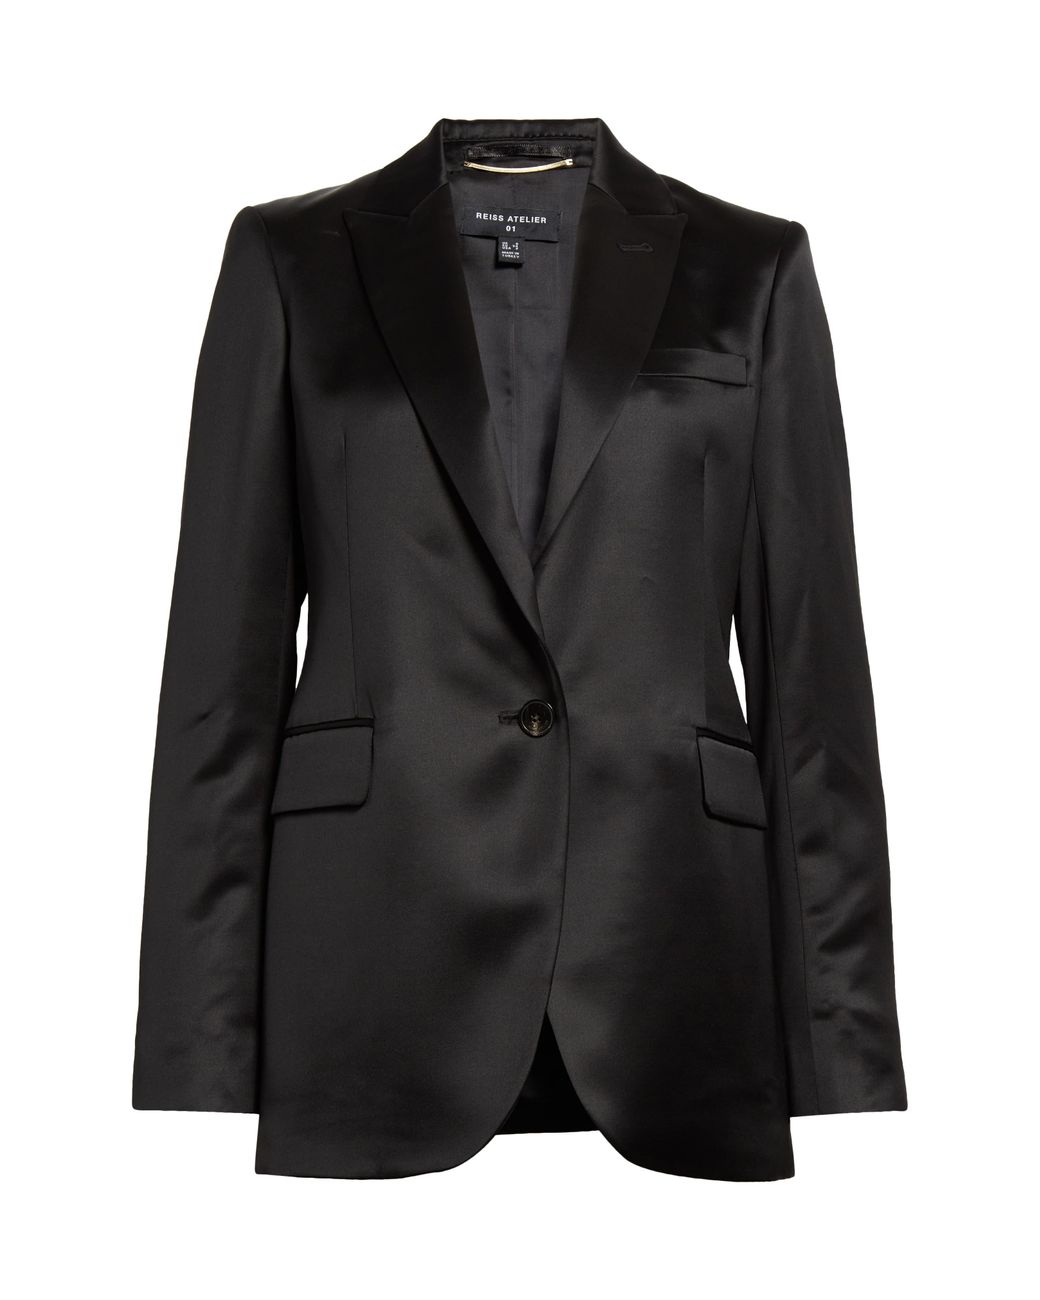 Reiss Haisley - Black Single Breasted Suit Blazer, US 0